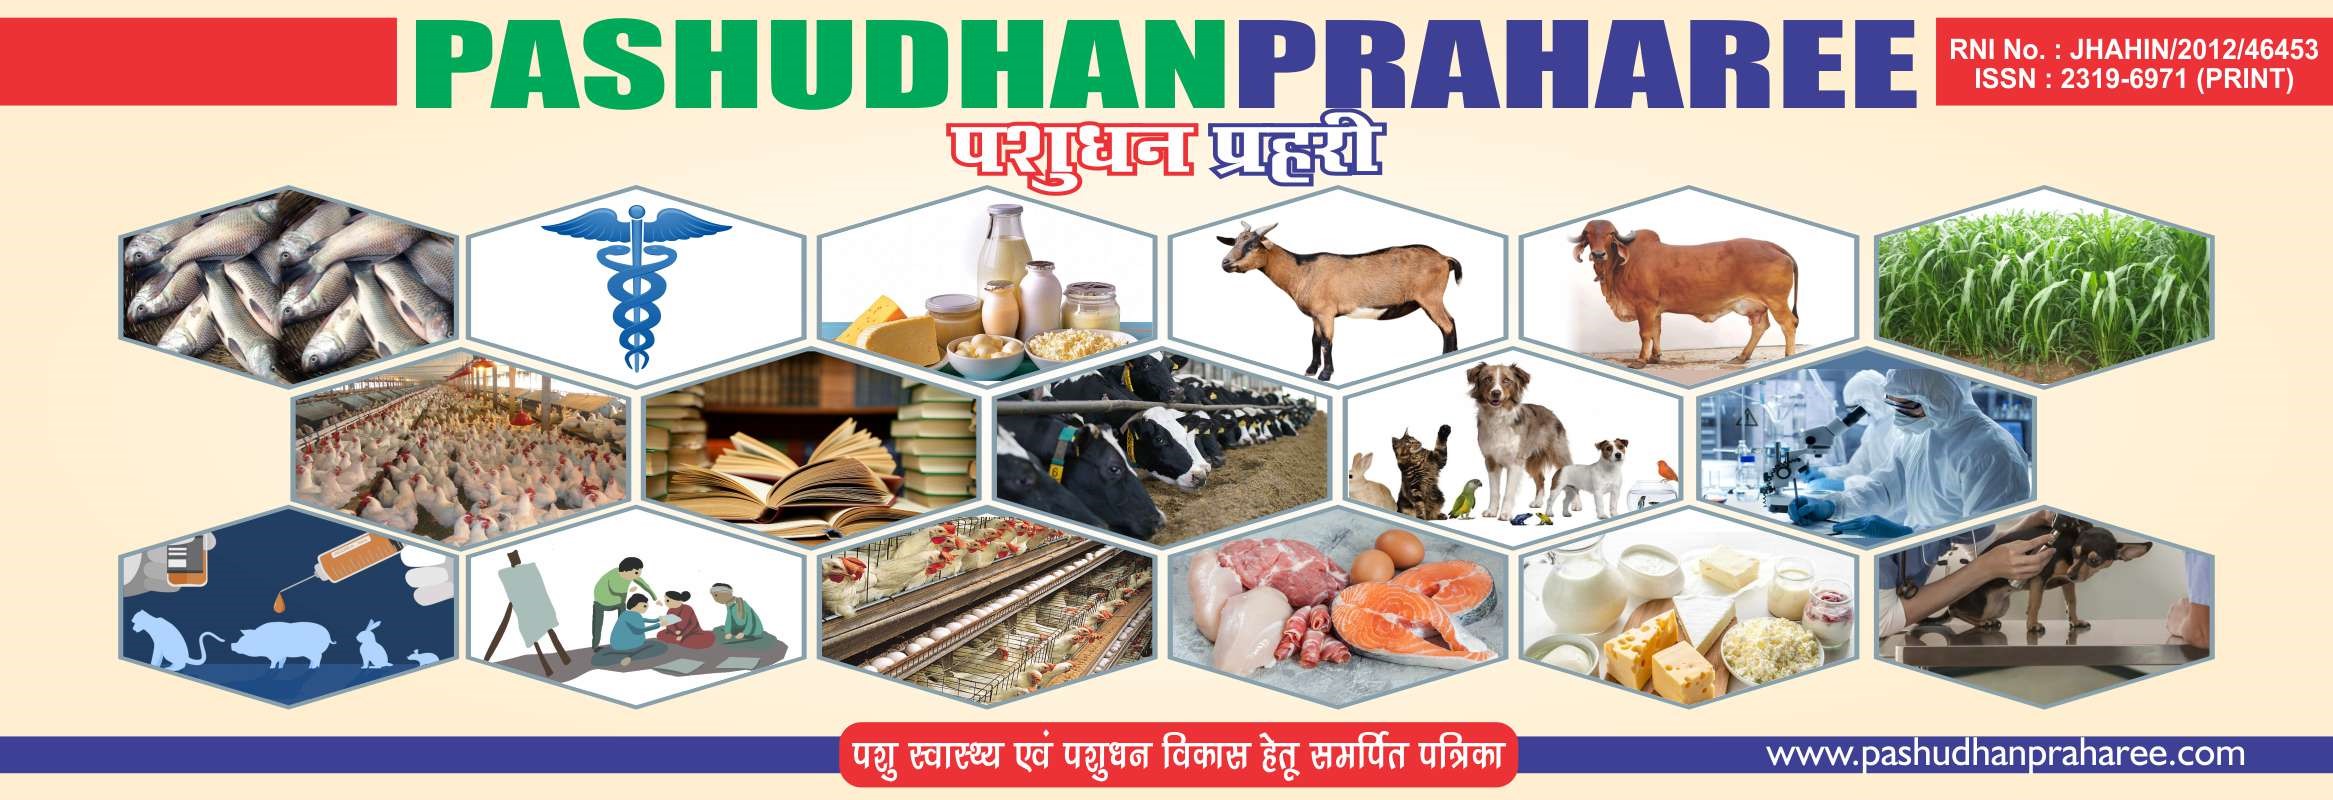 www.pashudhanpraharee.com